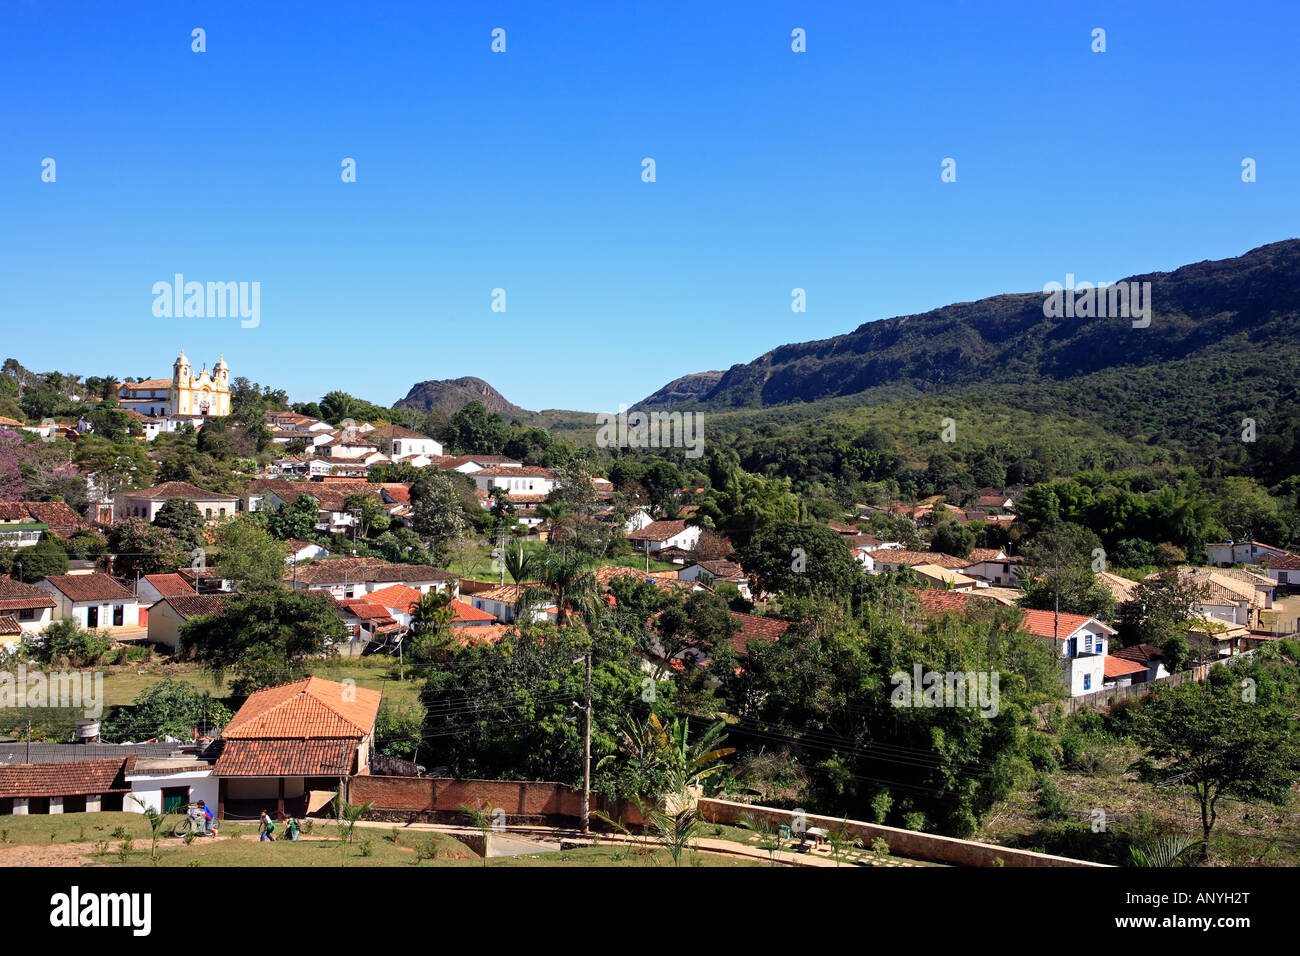 old village of tiradente in minas gerais state brazil Stock Photo